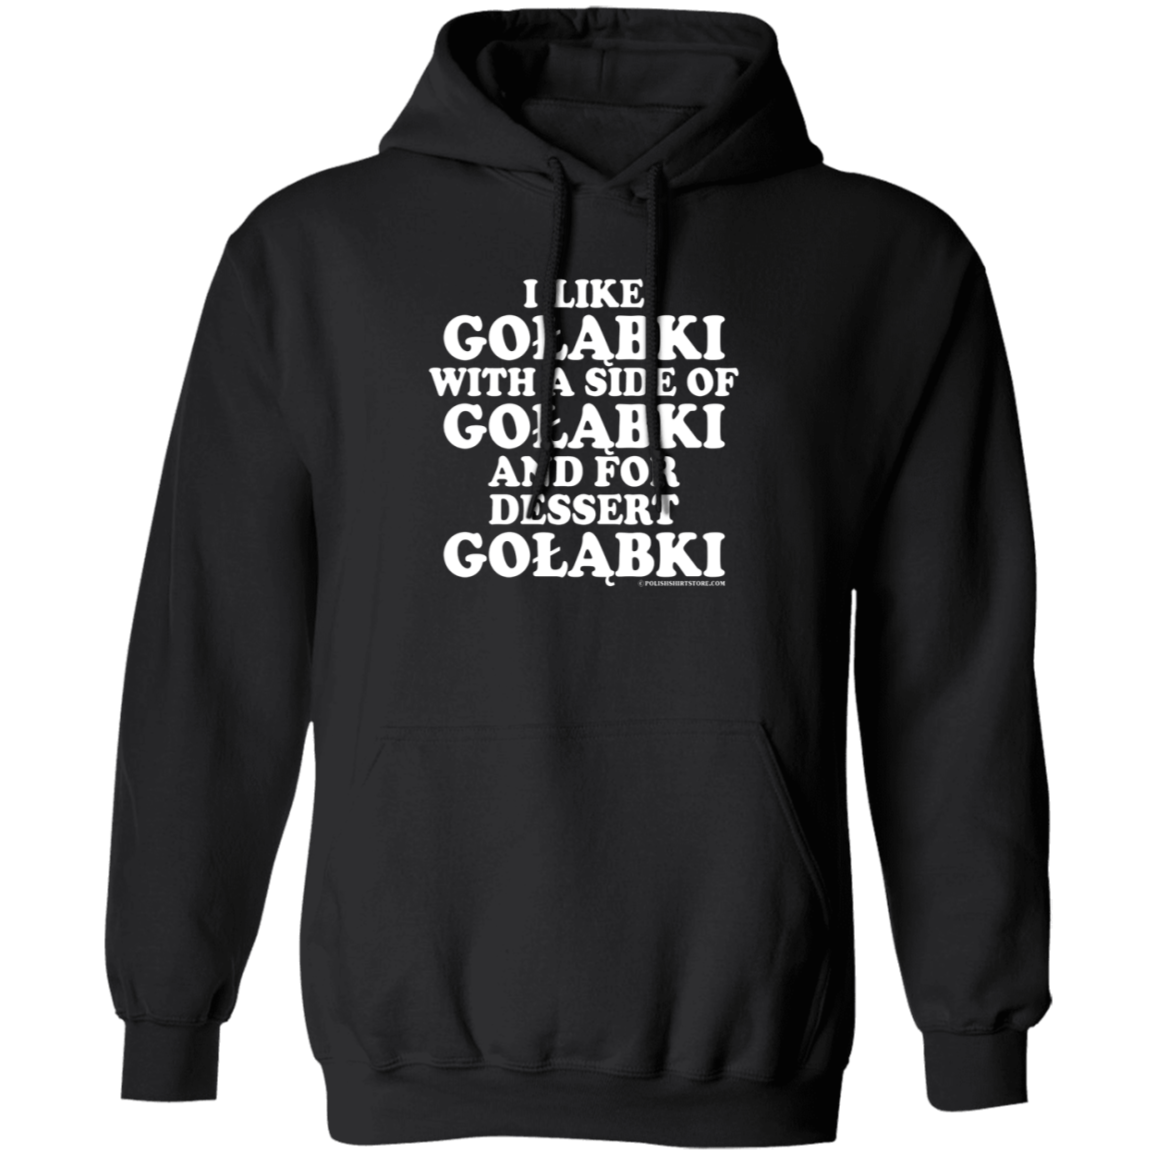 Golabki With A Side Of Golabki Apparel CustomCat G185 Pullover Hoodie Black S